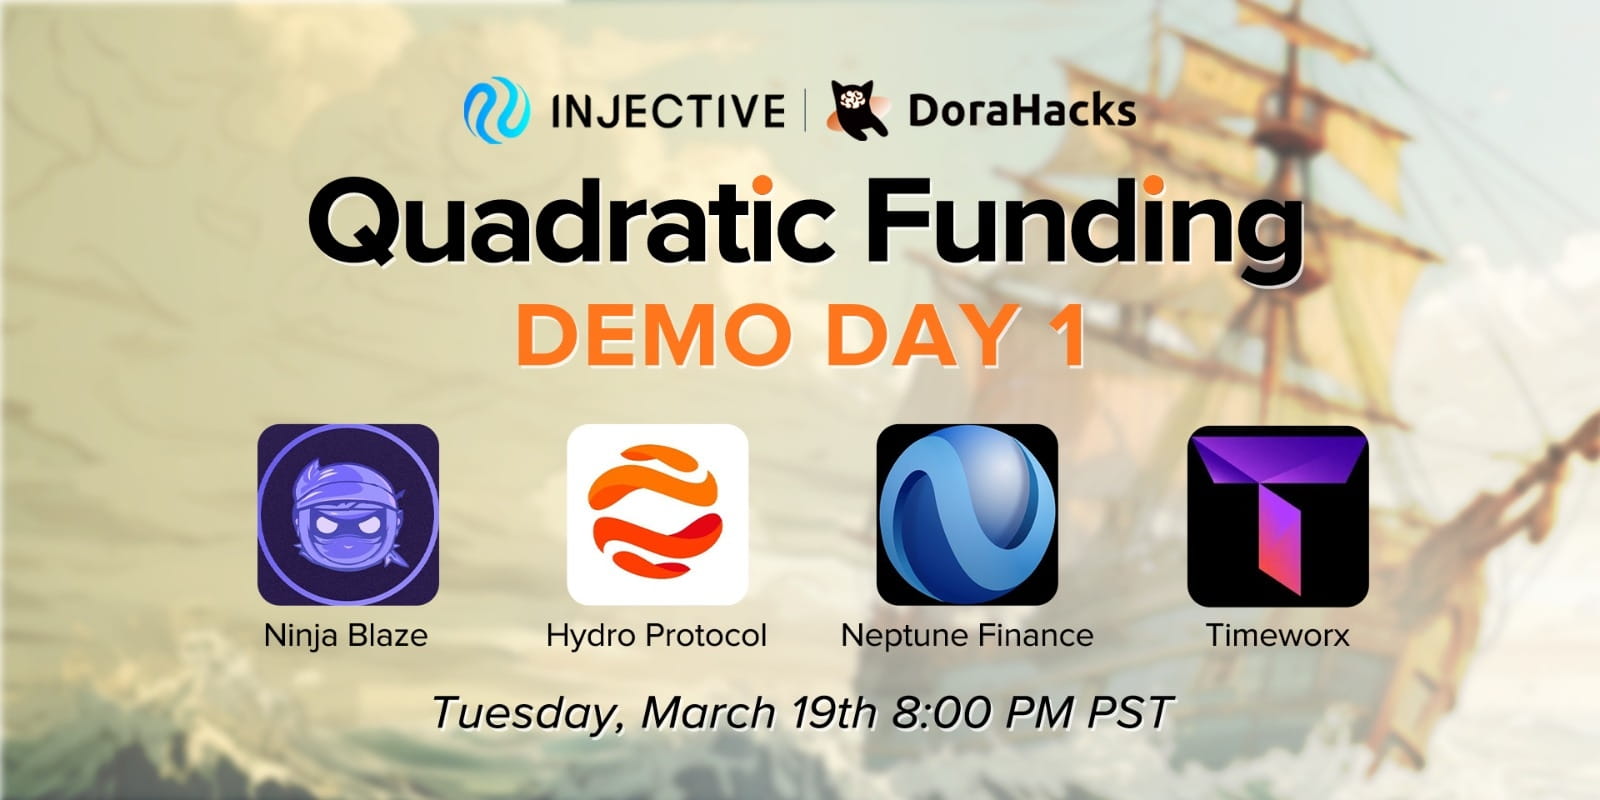 Injective Grant DAO Quadratic Funding Round1 Demo Day 1